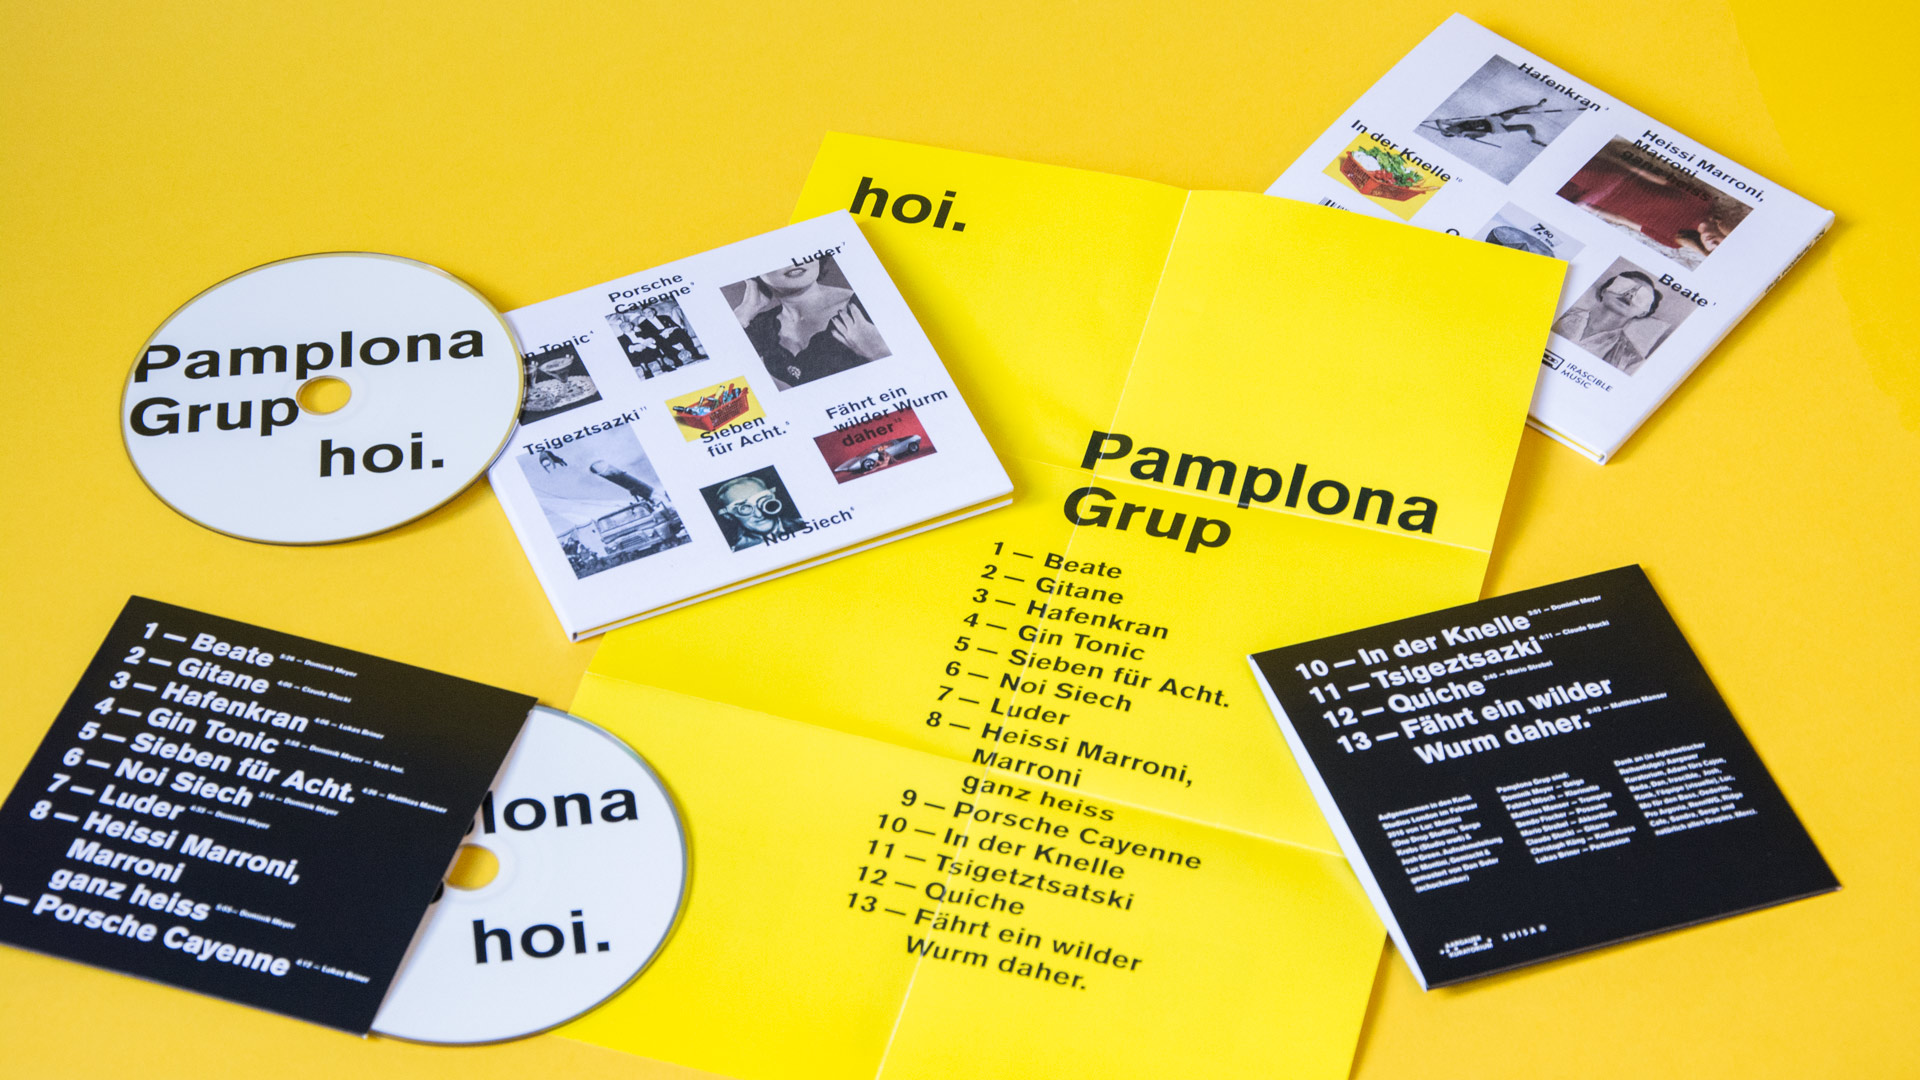 l’équipe [visuelle] – Pamplona Grup – Artwork, Digipack, Plakatgestaltung, Worldmusic, Webdesign, Responsive, Web-Programming, Migros Körbli